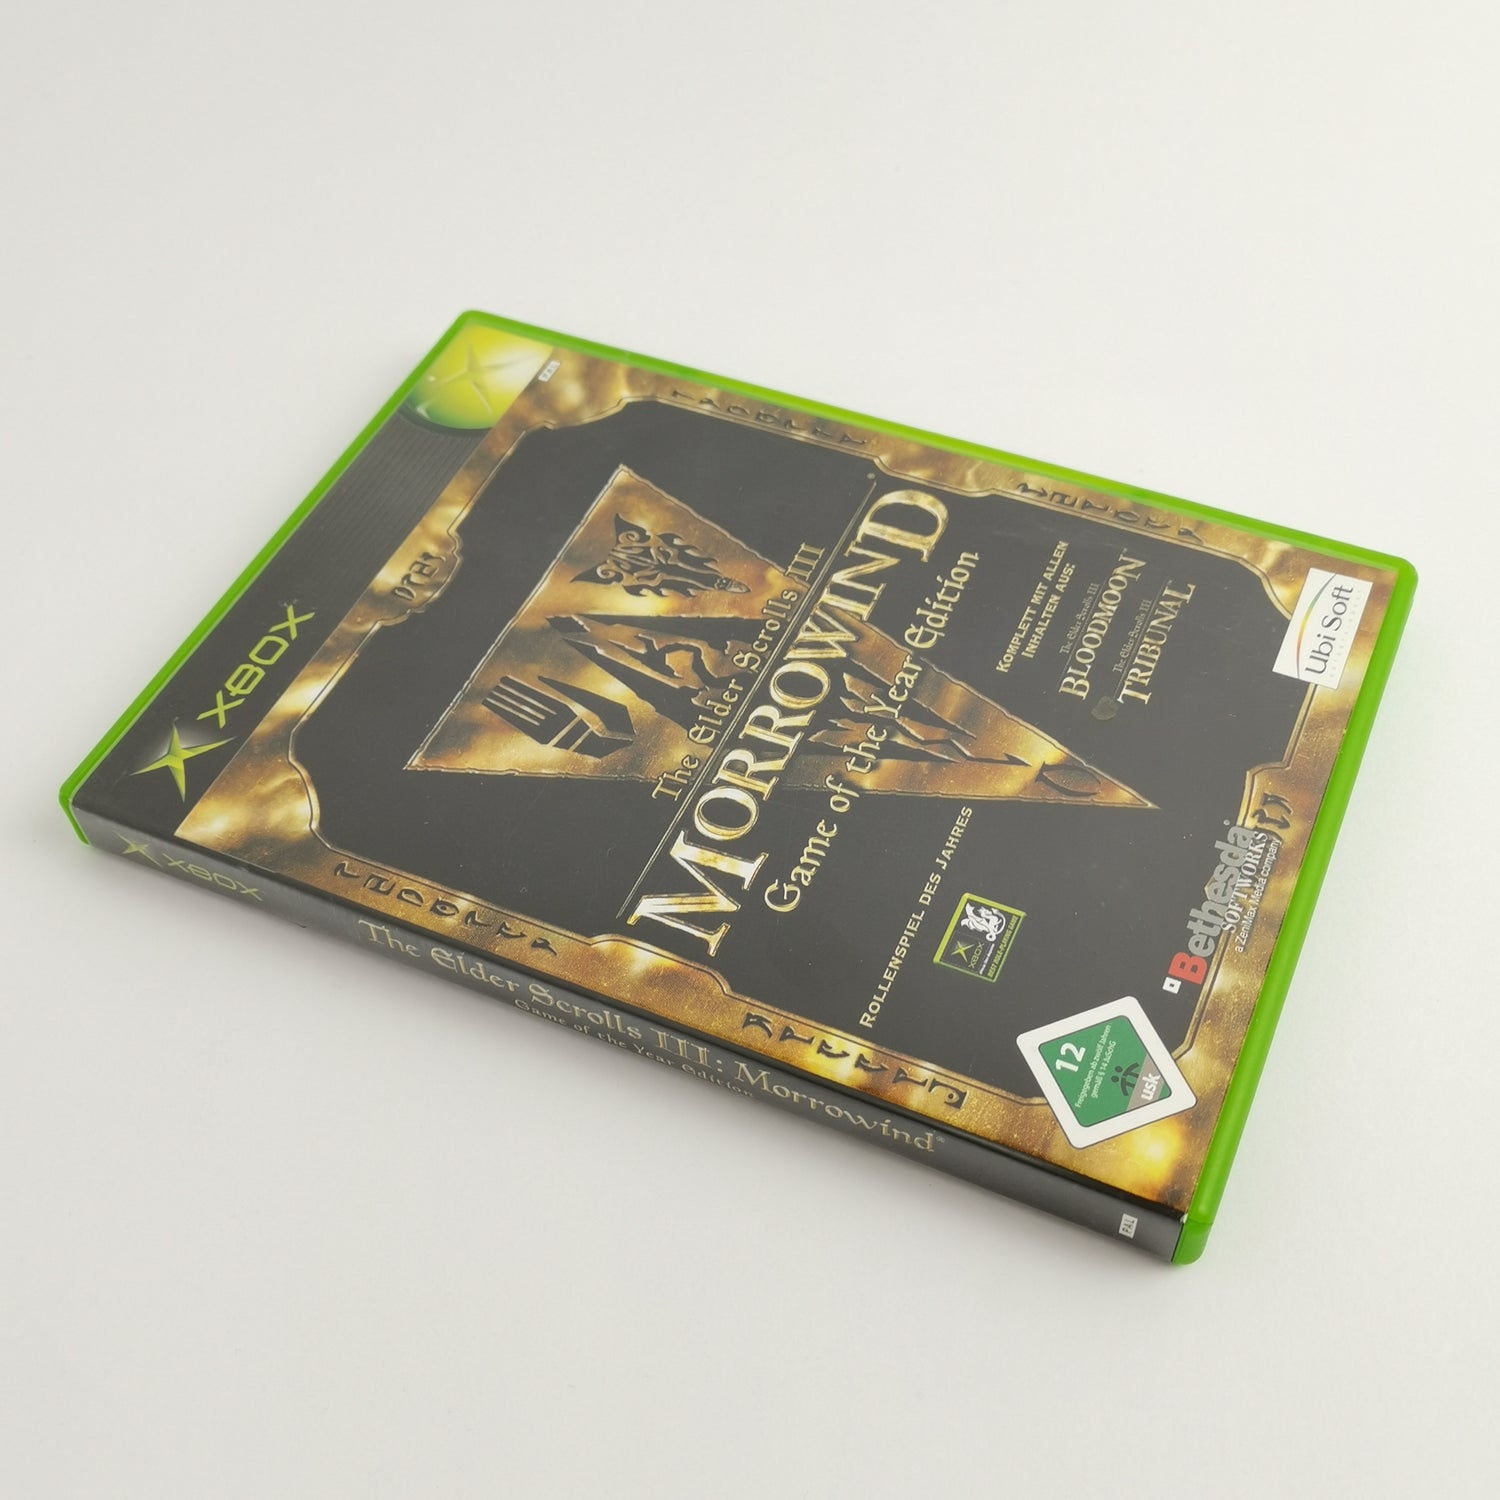 Microsoft Xbox Classic The Elder Scrolls III Morrowind Game of the Year Edi. [2]